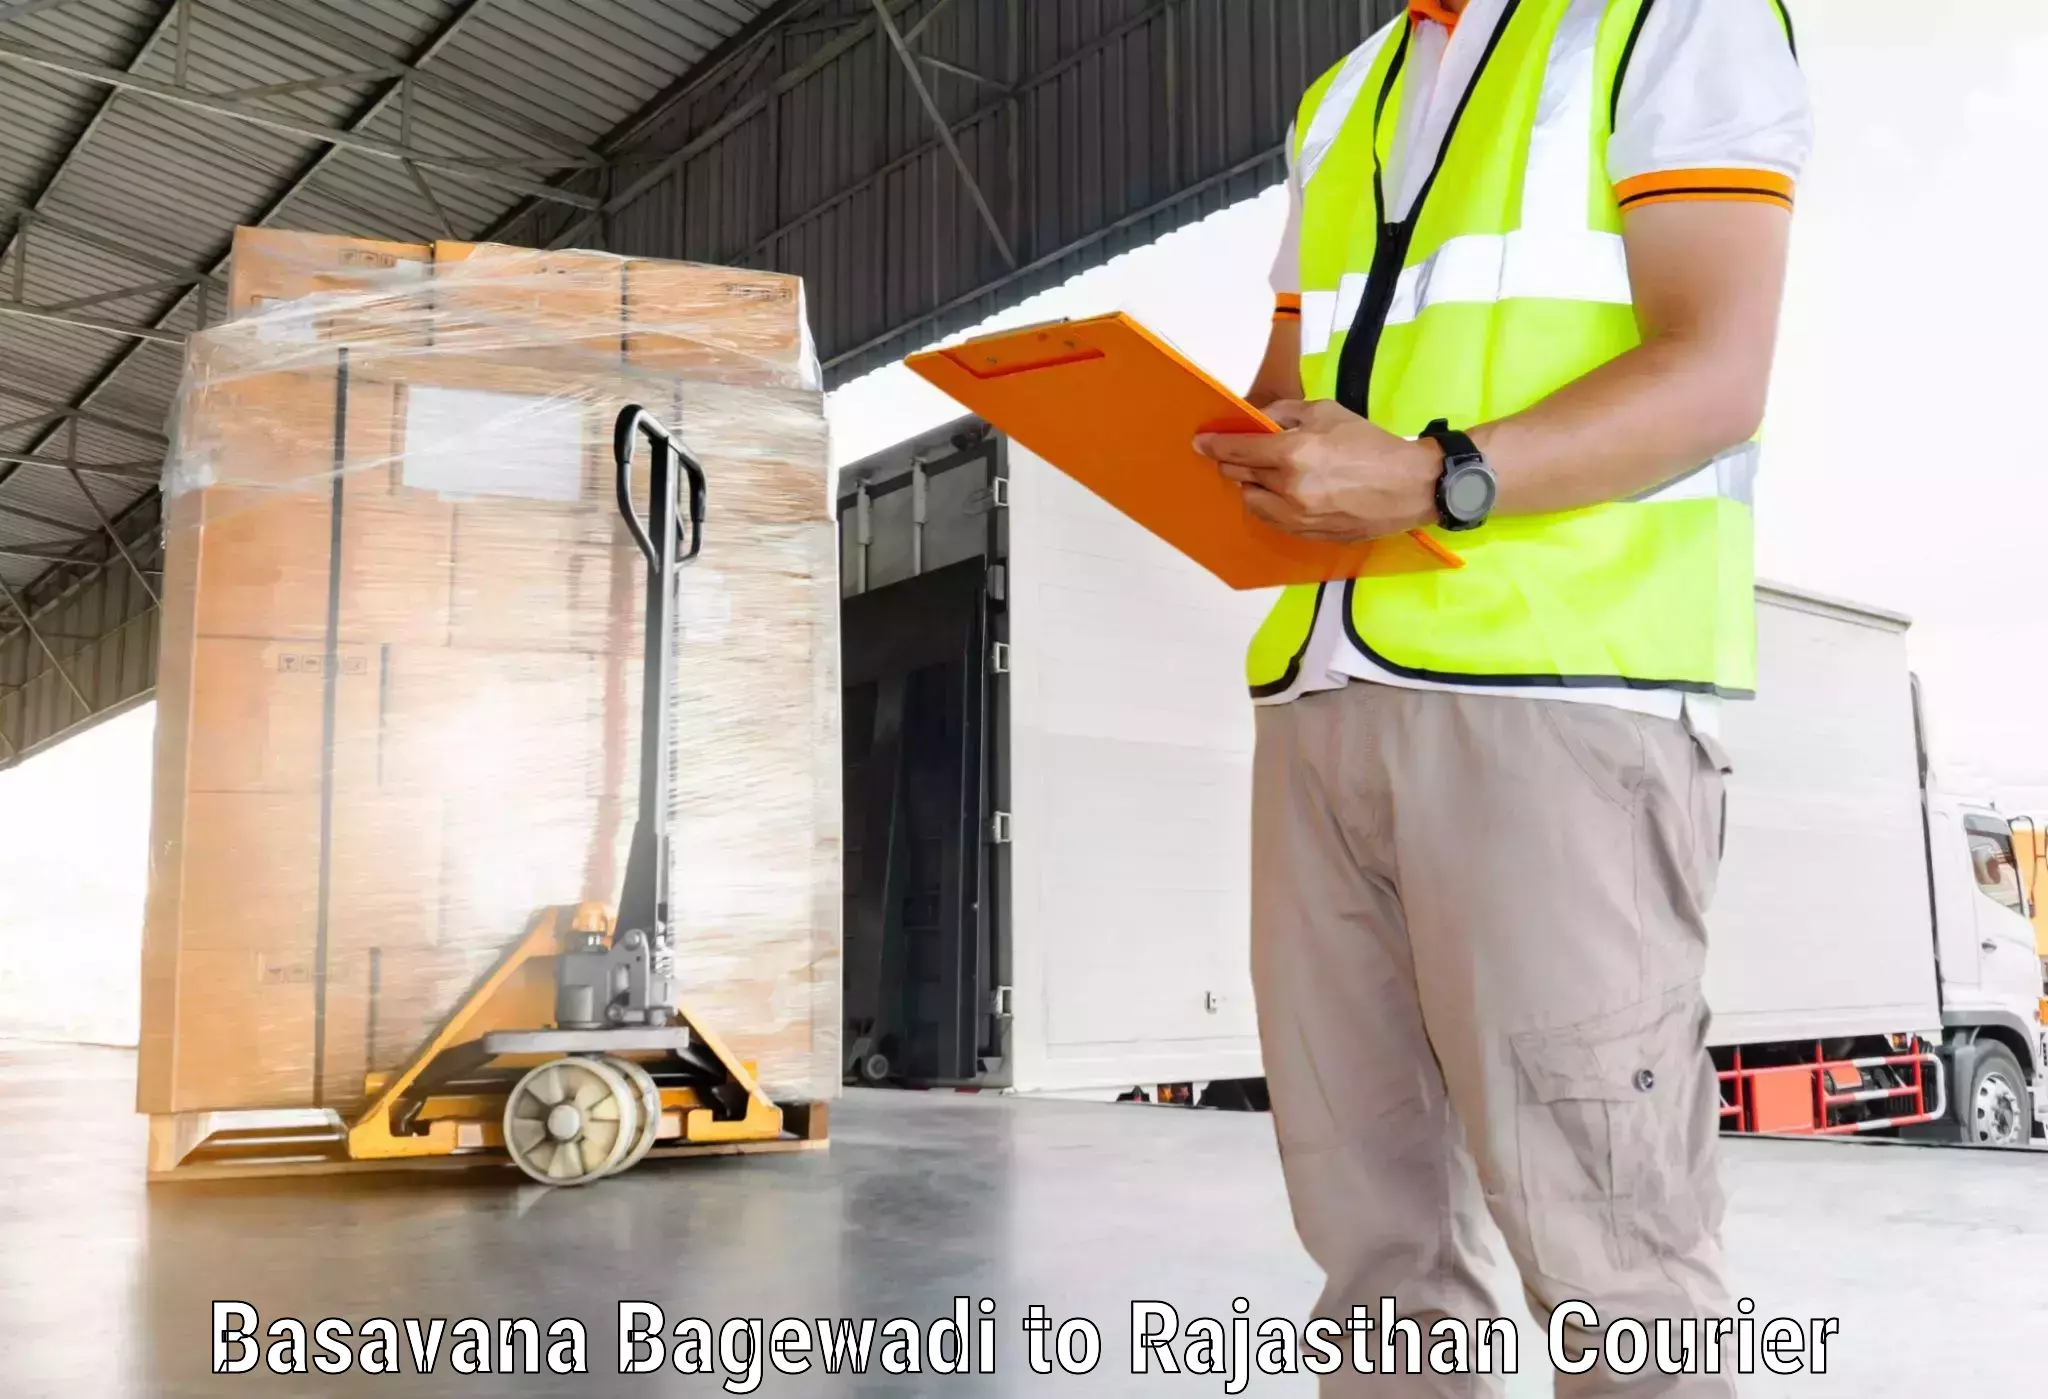 Courier service innovation Basavana Bagewadi to Raila